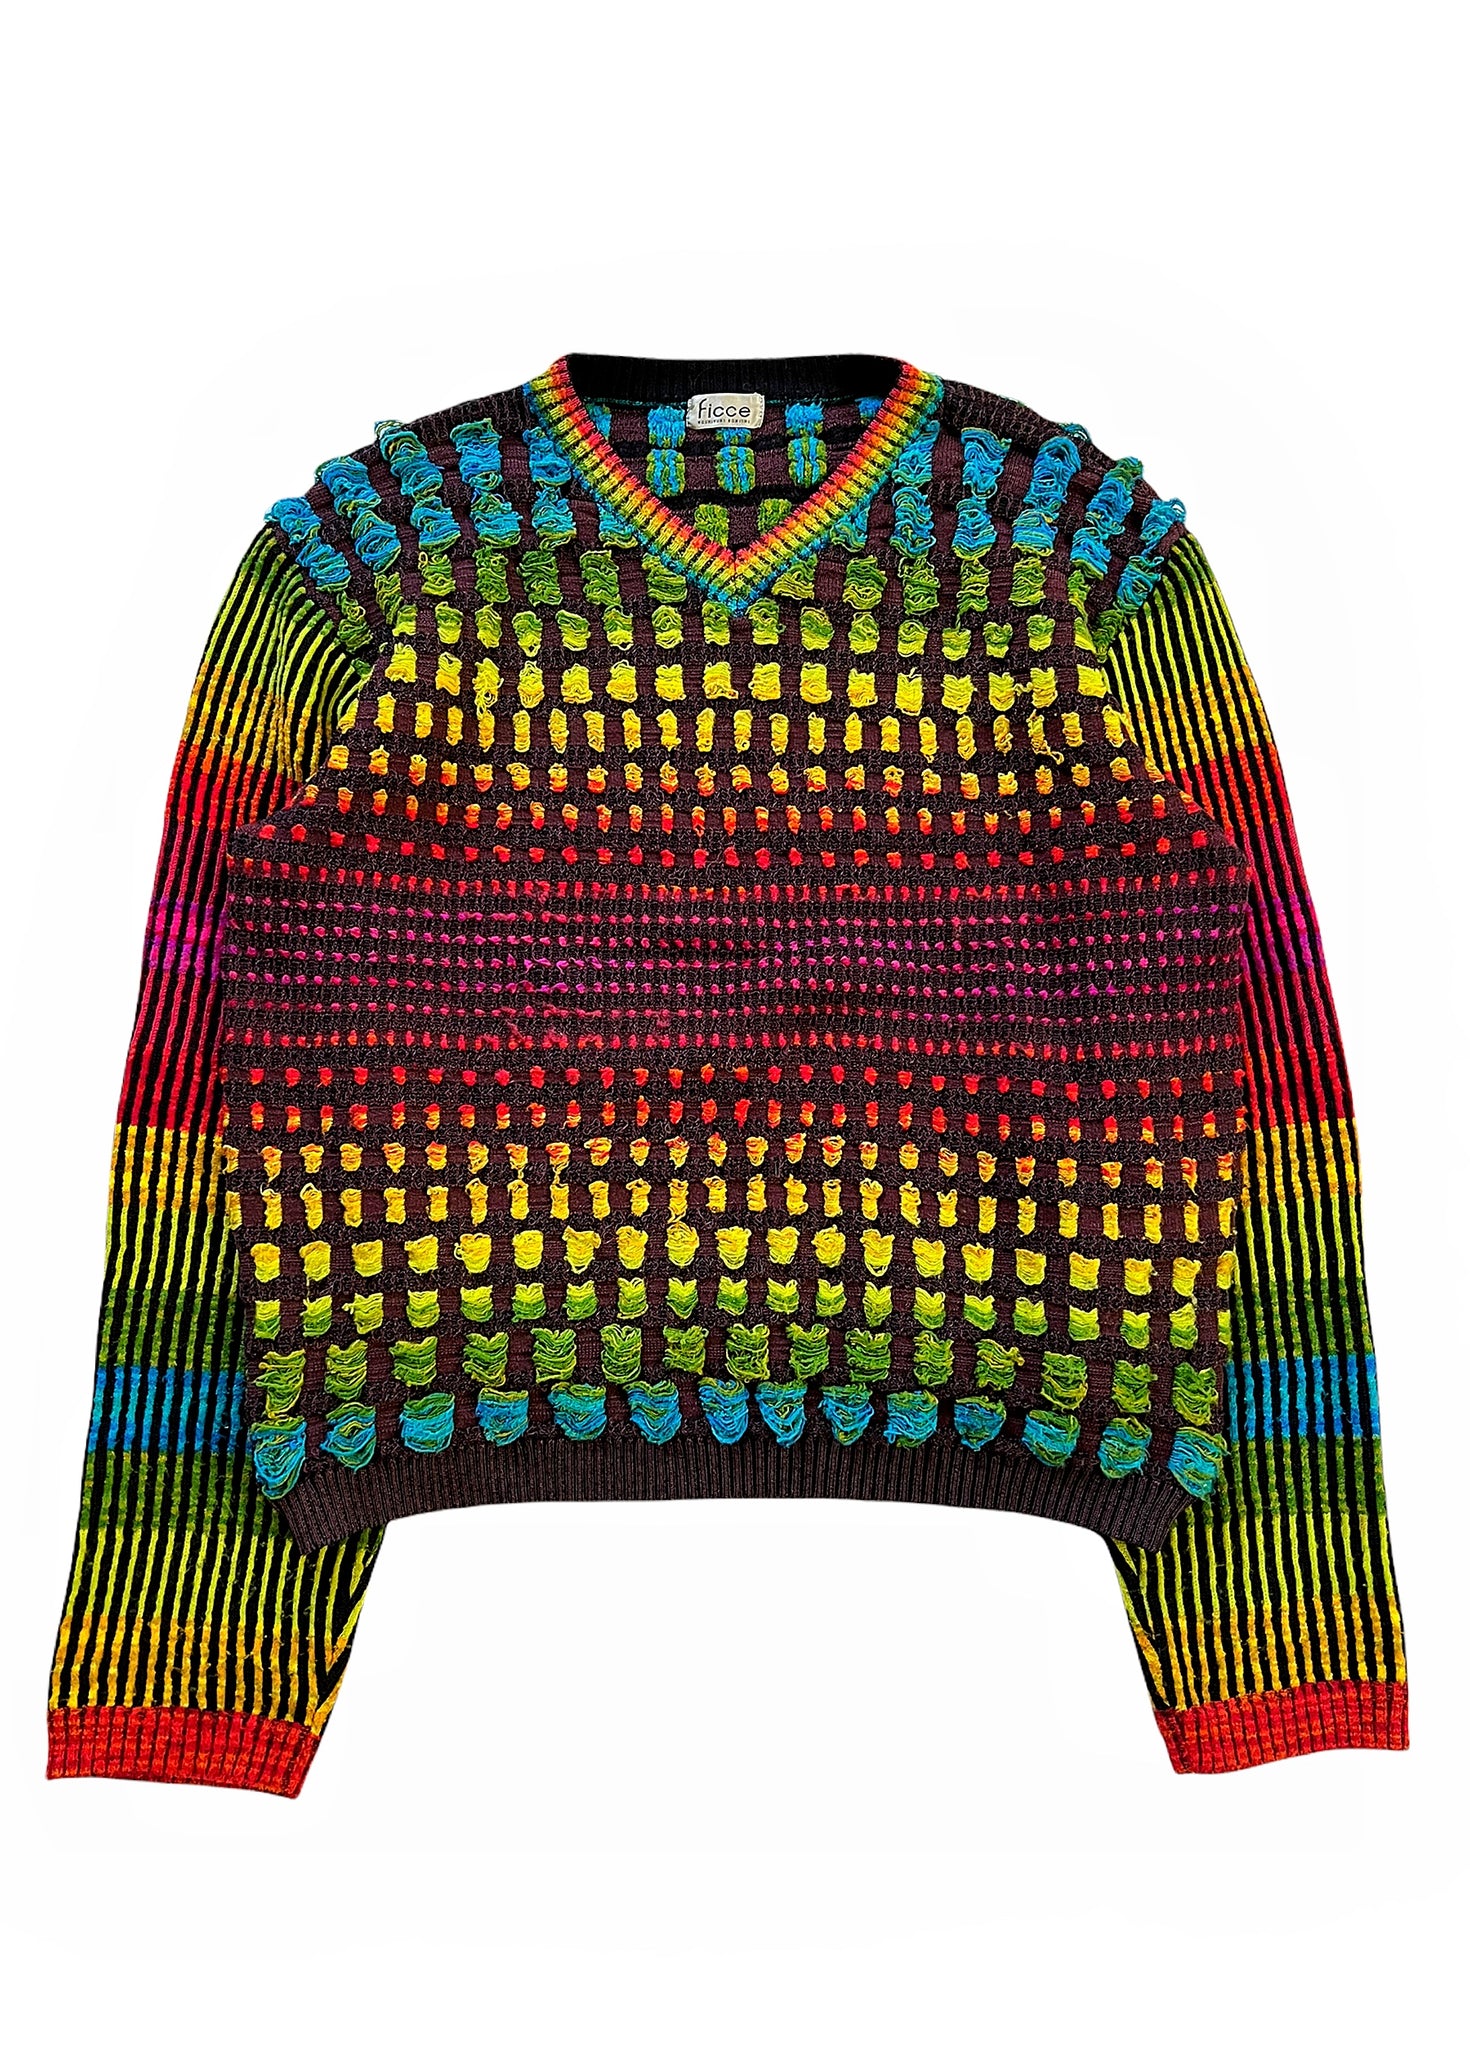 1980’s Rainbow Puff Knit